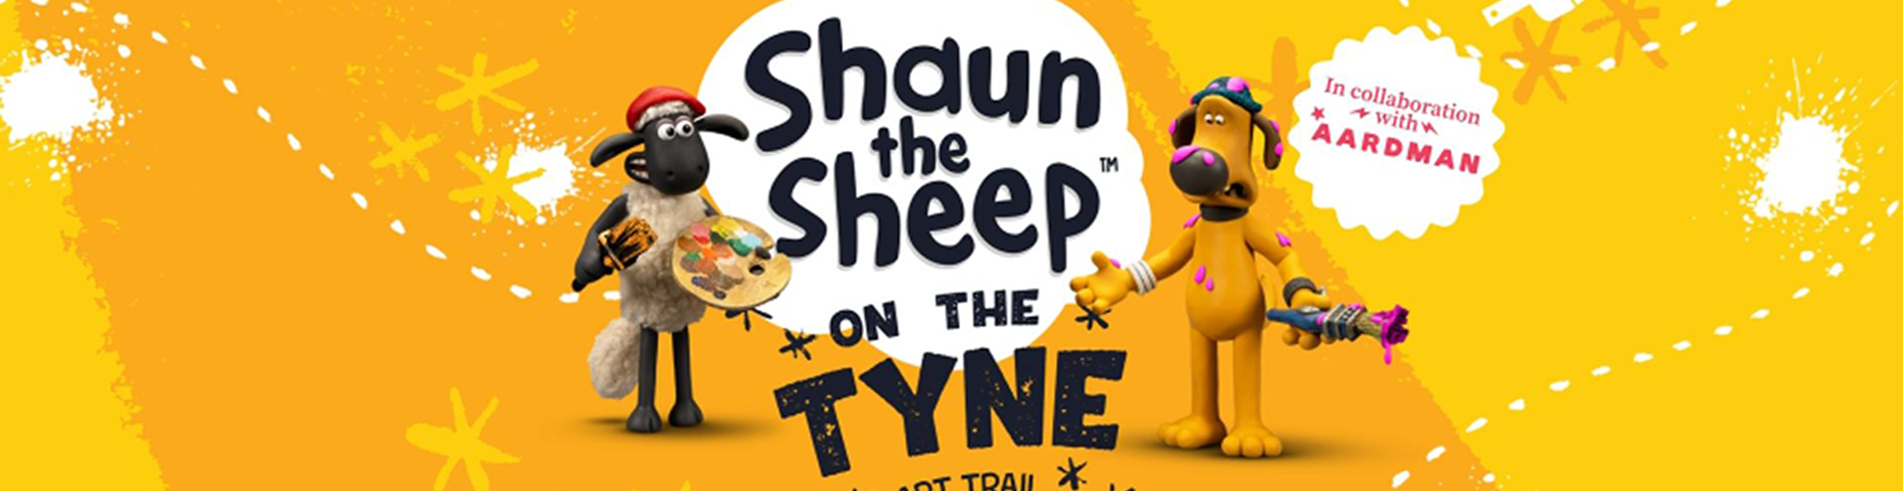 Shaun the Sheep - Header